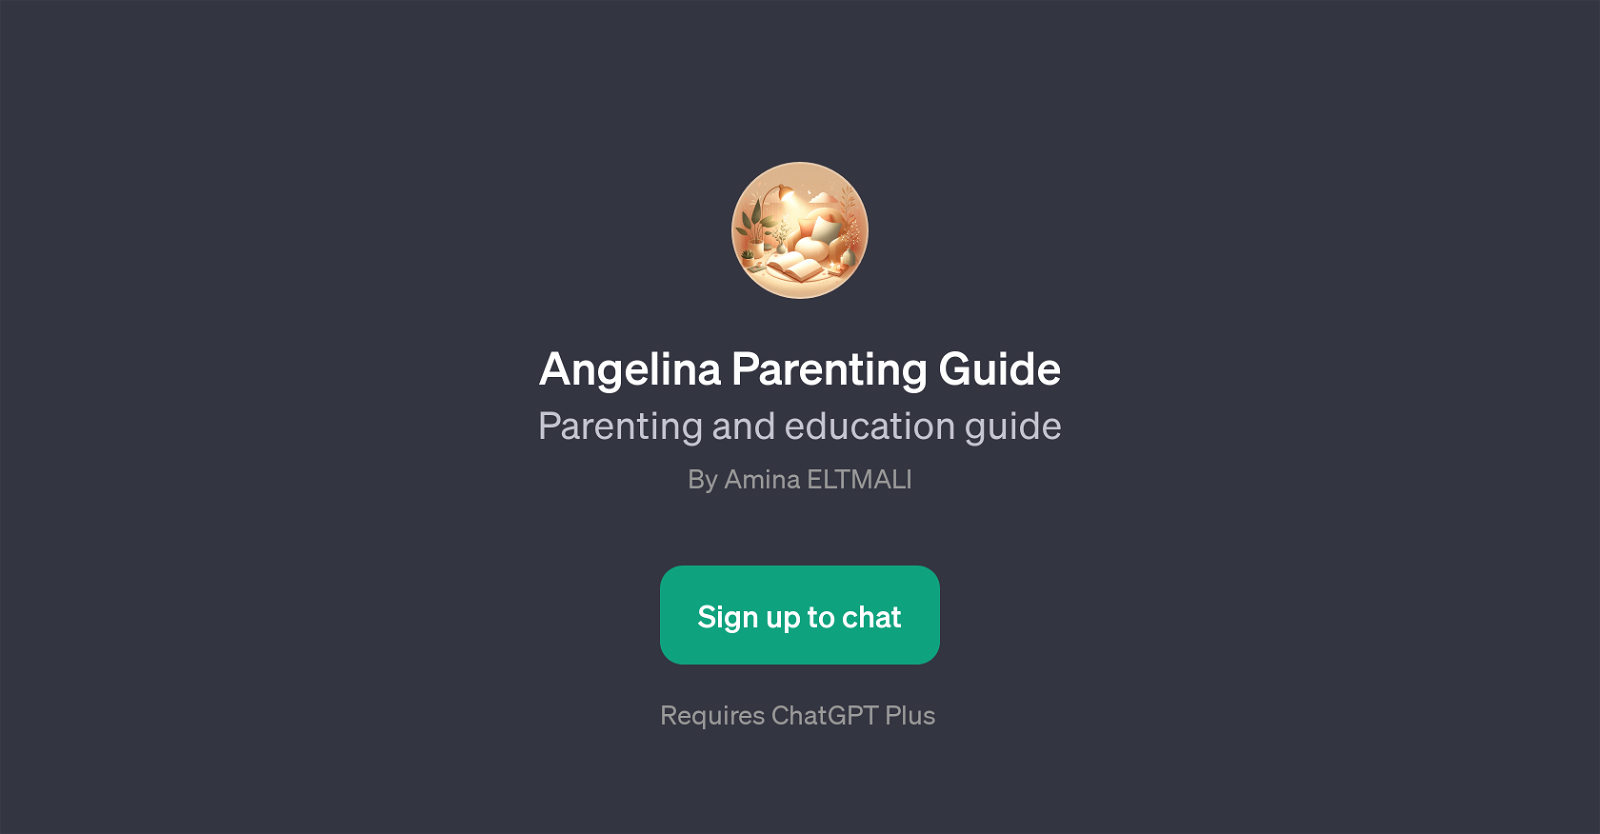 Angelina Parenting Guide website